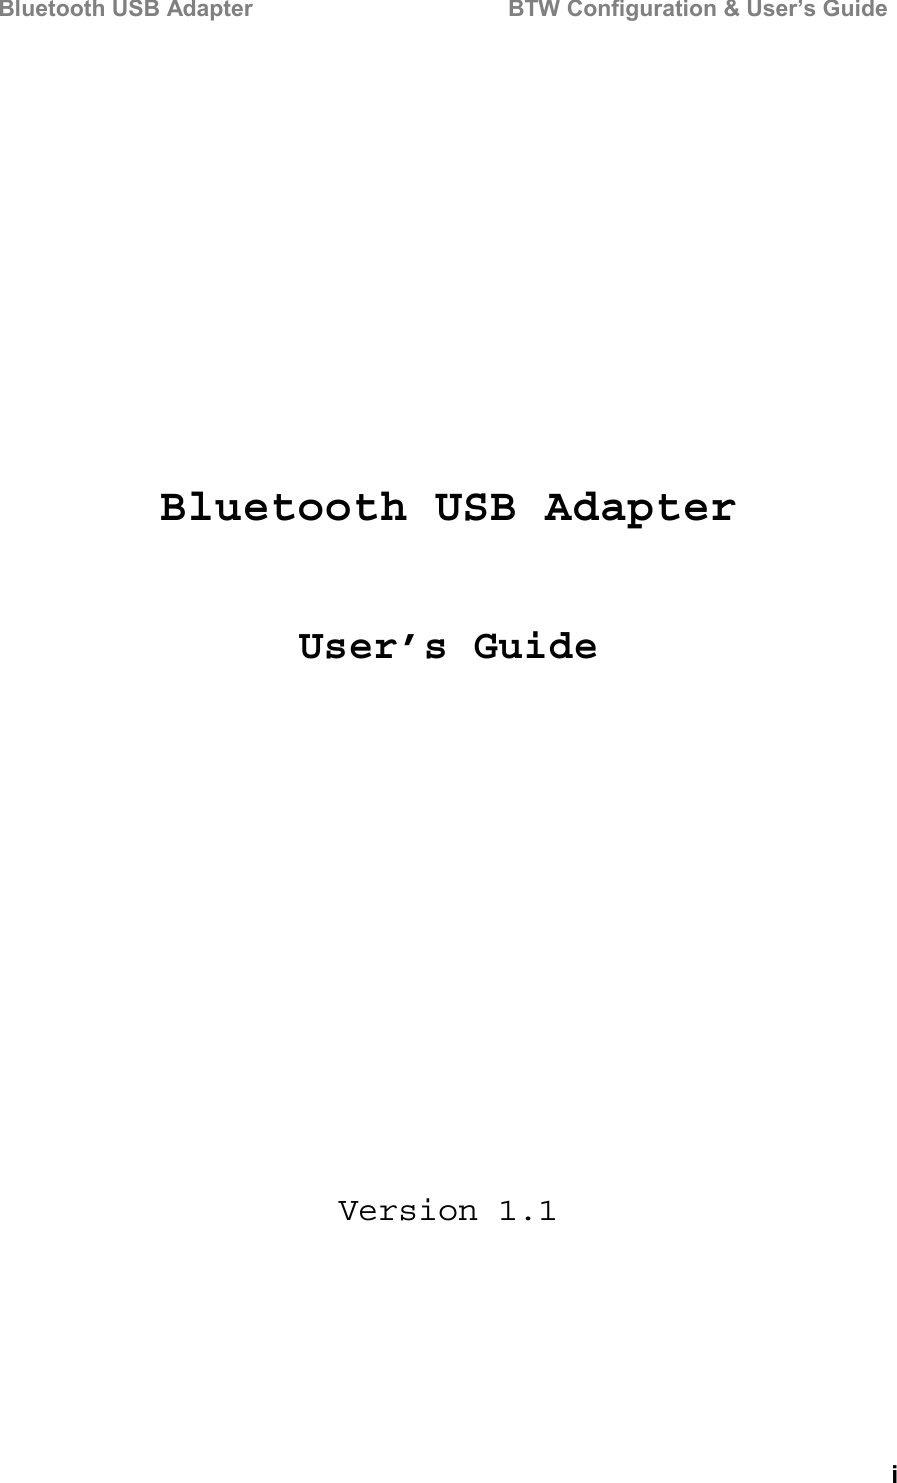 Bluetooth USB Adapter                                        BTW Configuration &amp; User’s GuideiBluetooth USB AdapterUser’s GuideVersion 1.1